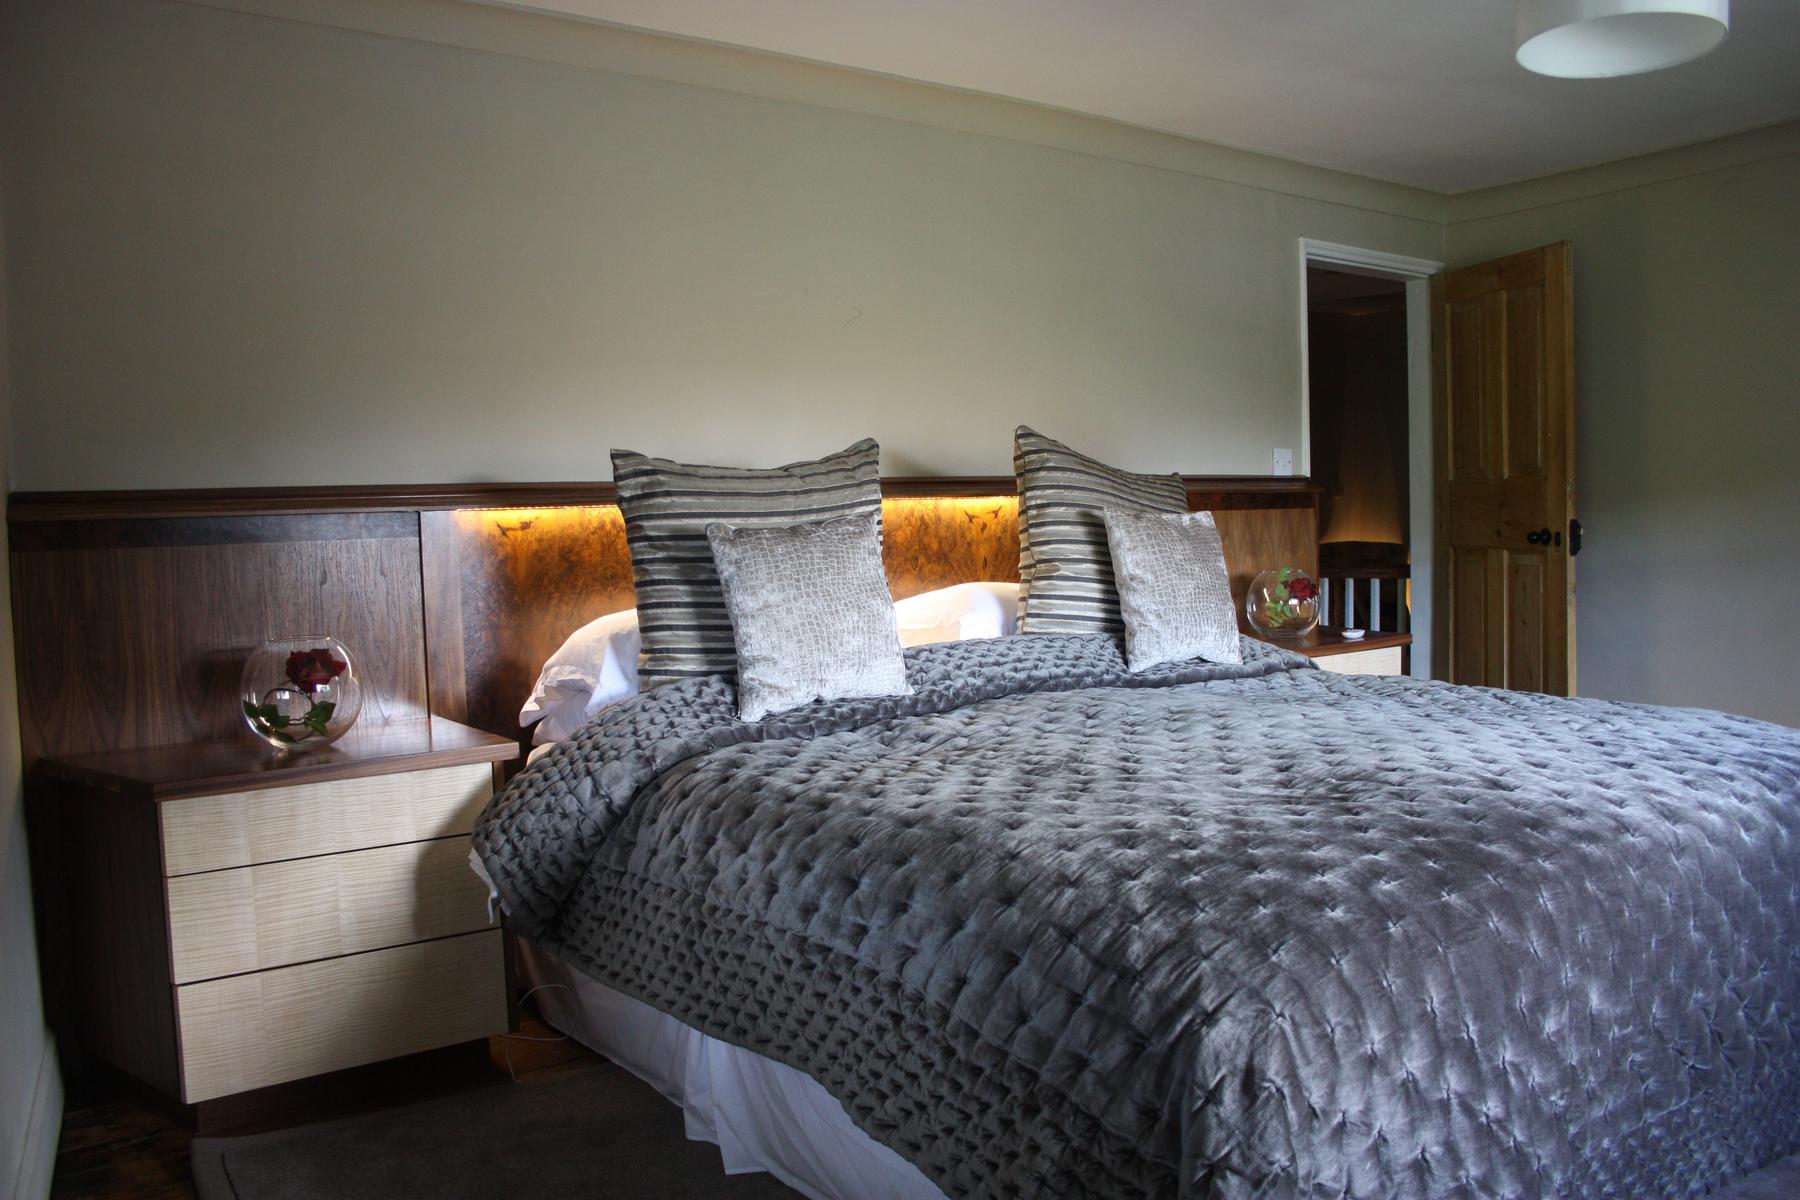 bespoke bedroom furniture hampshire